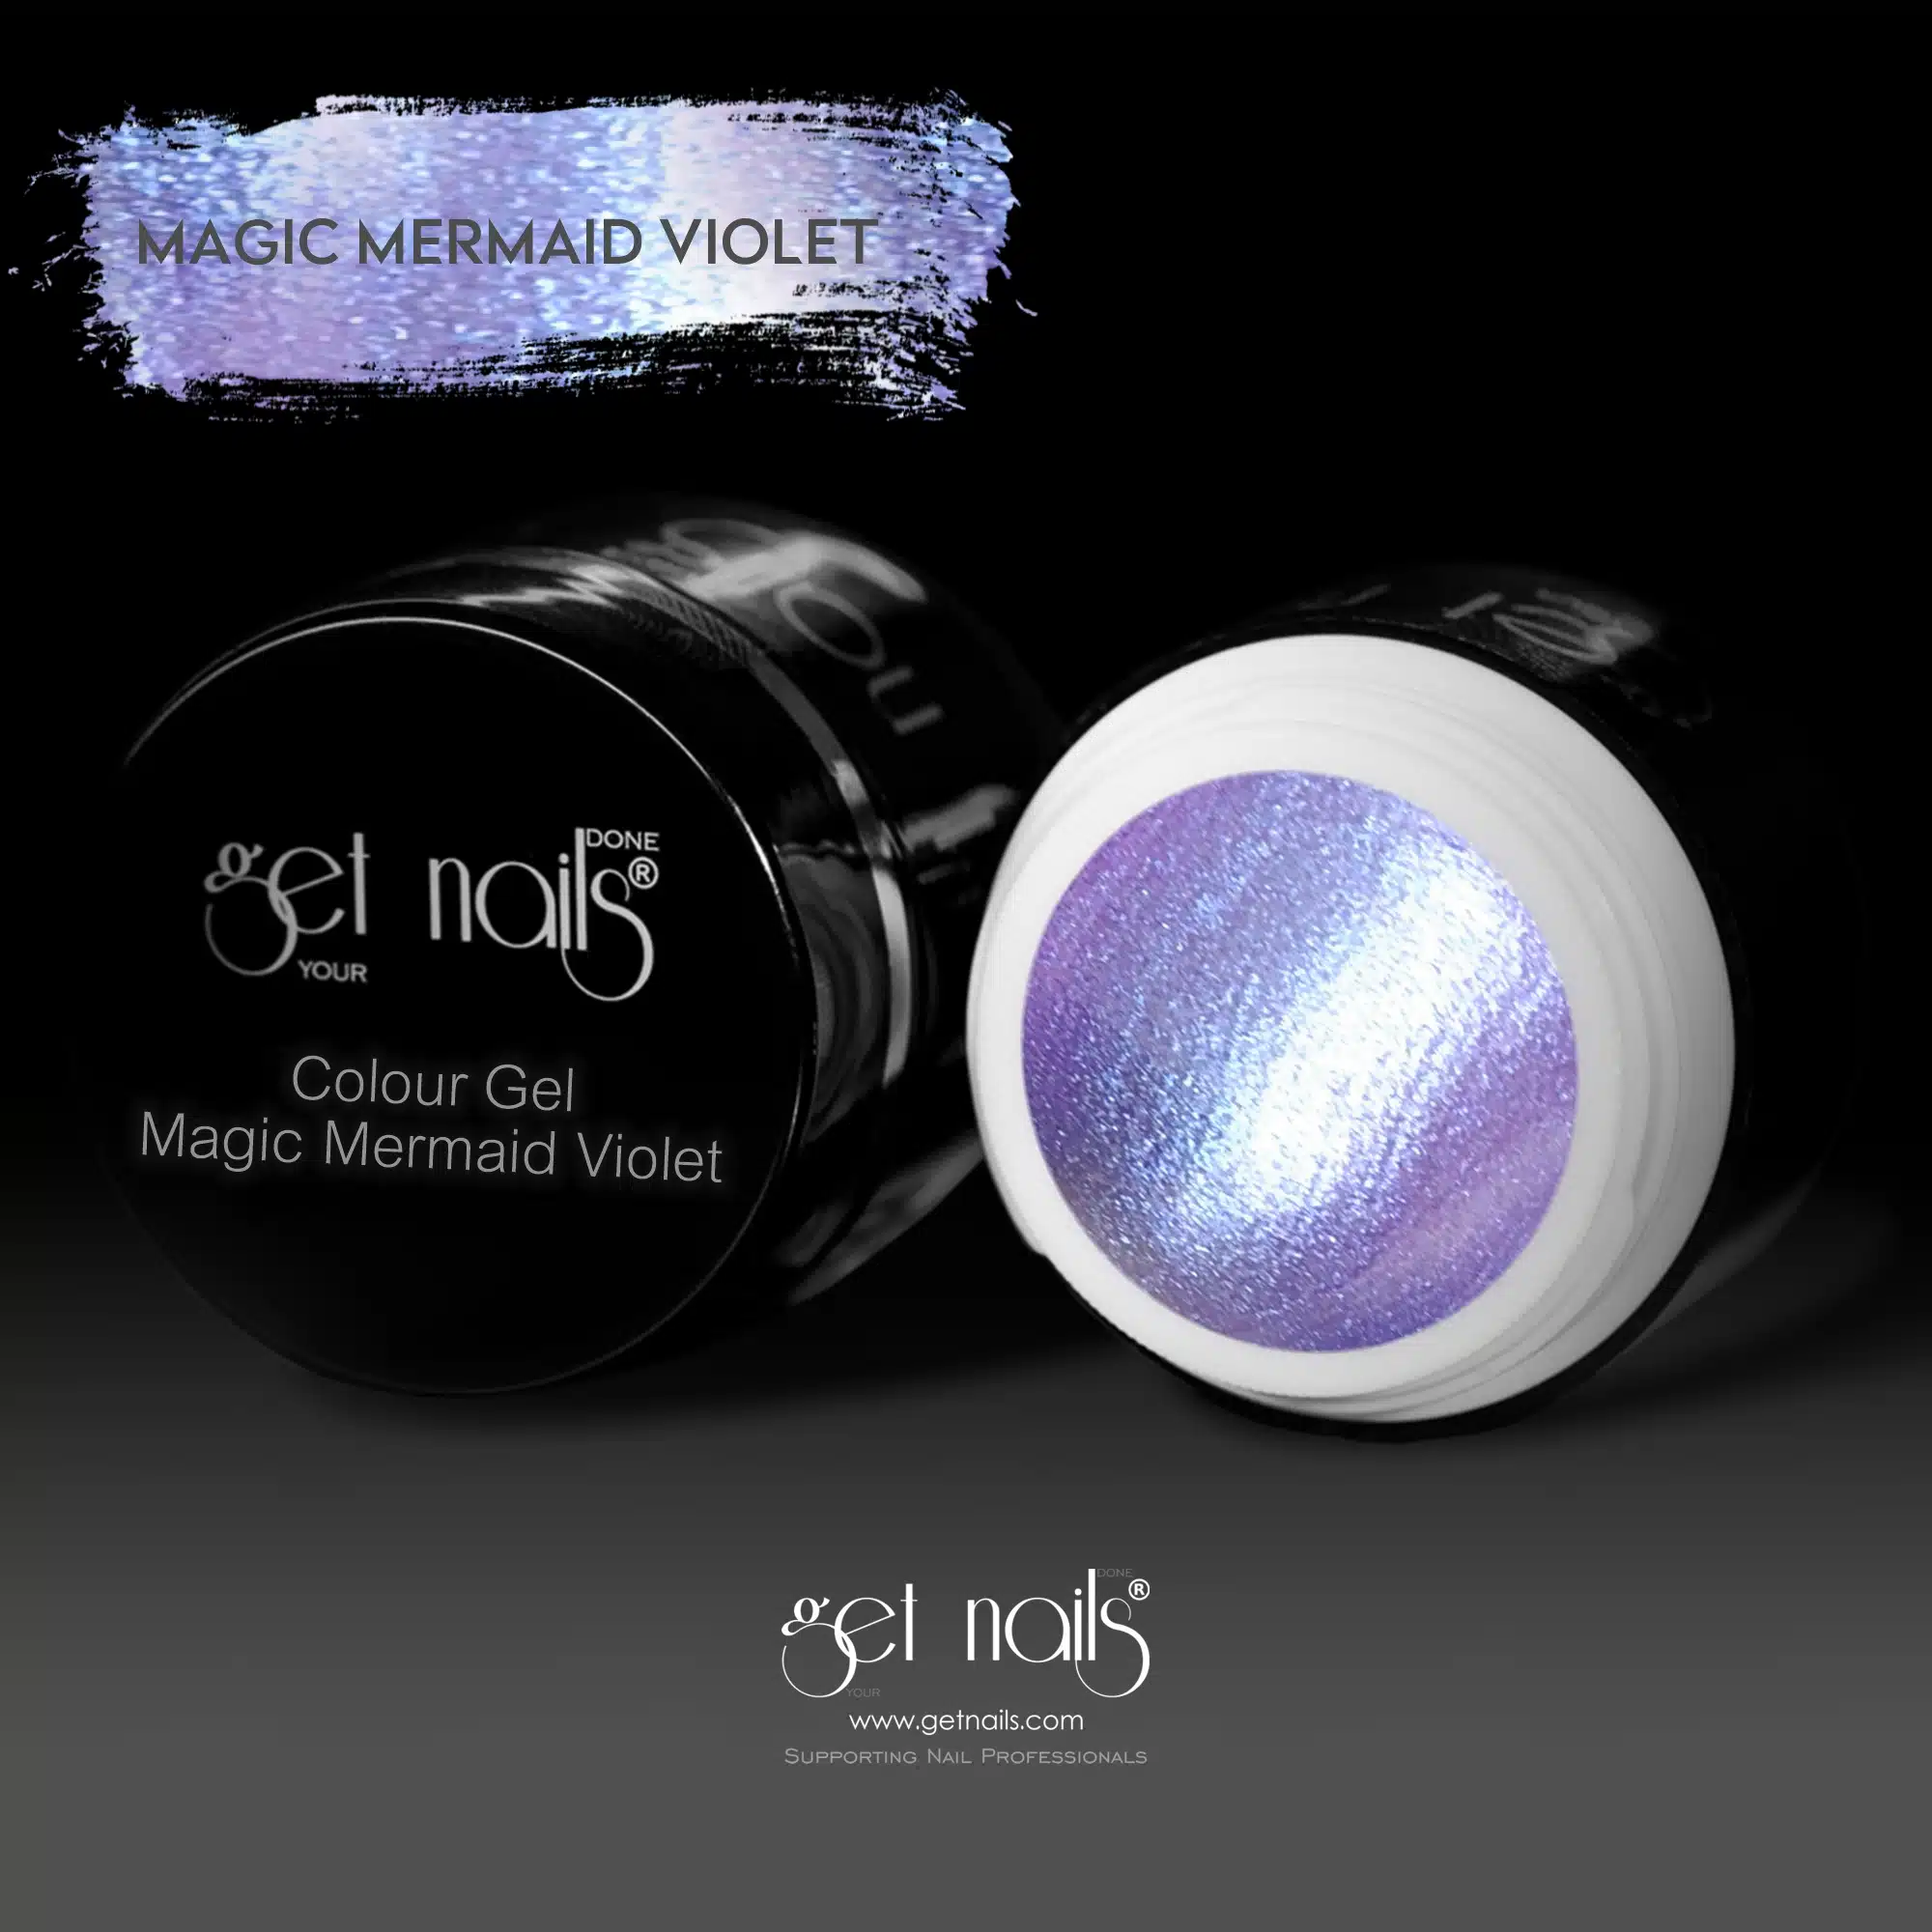 Get Nails Austria - Colour Gel Magic Mermaid Violet 5g